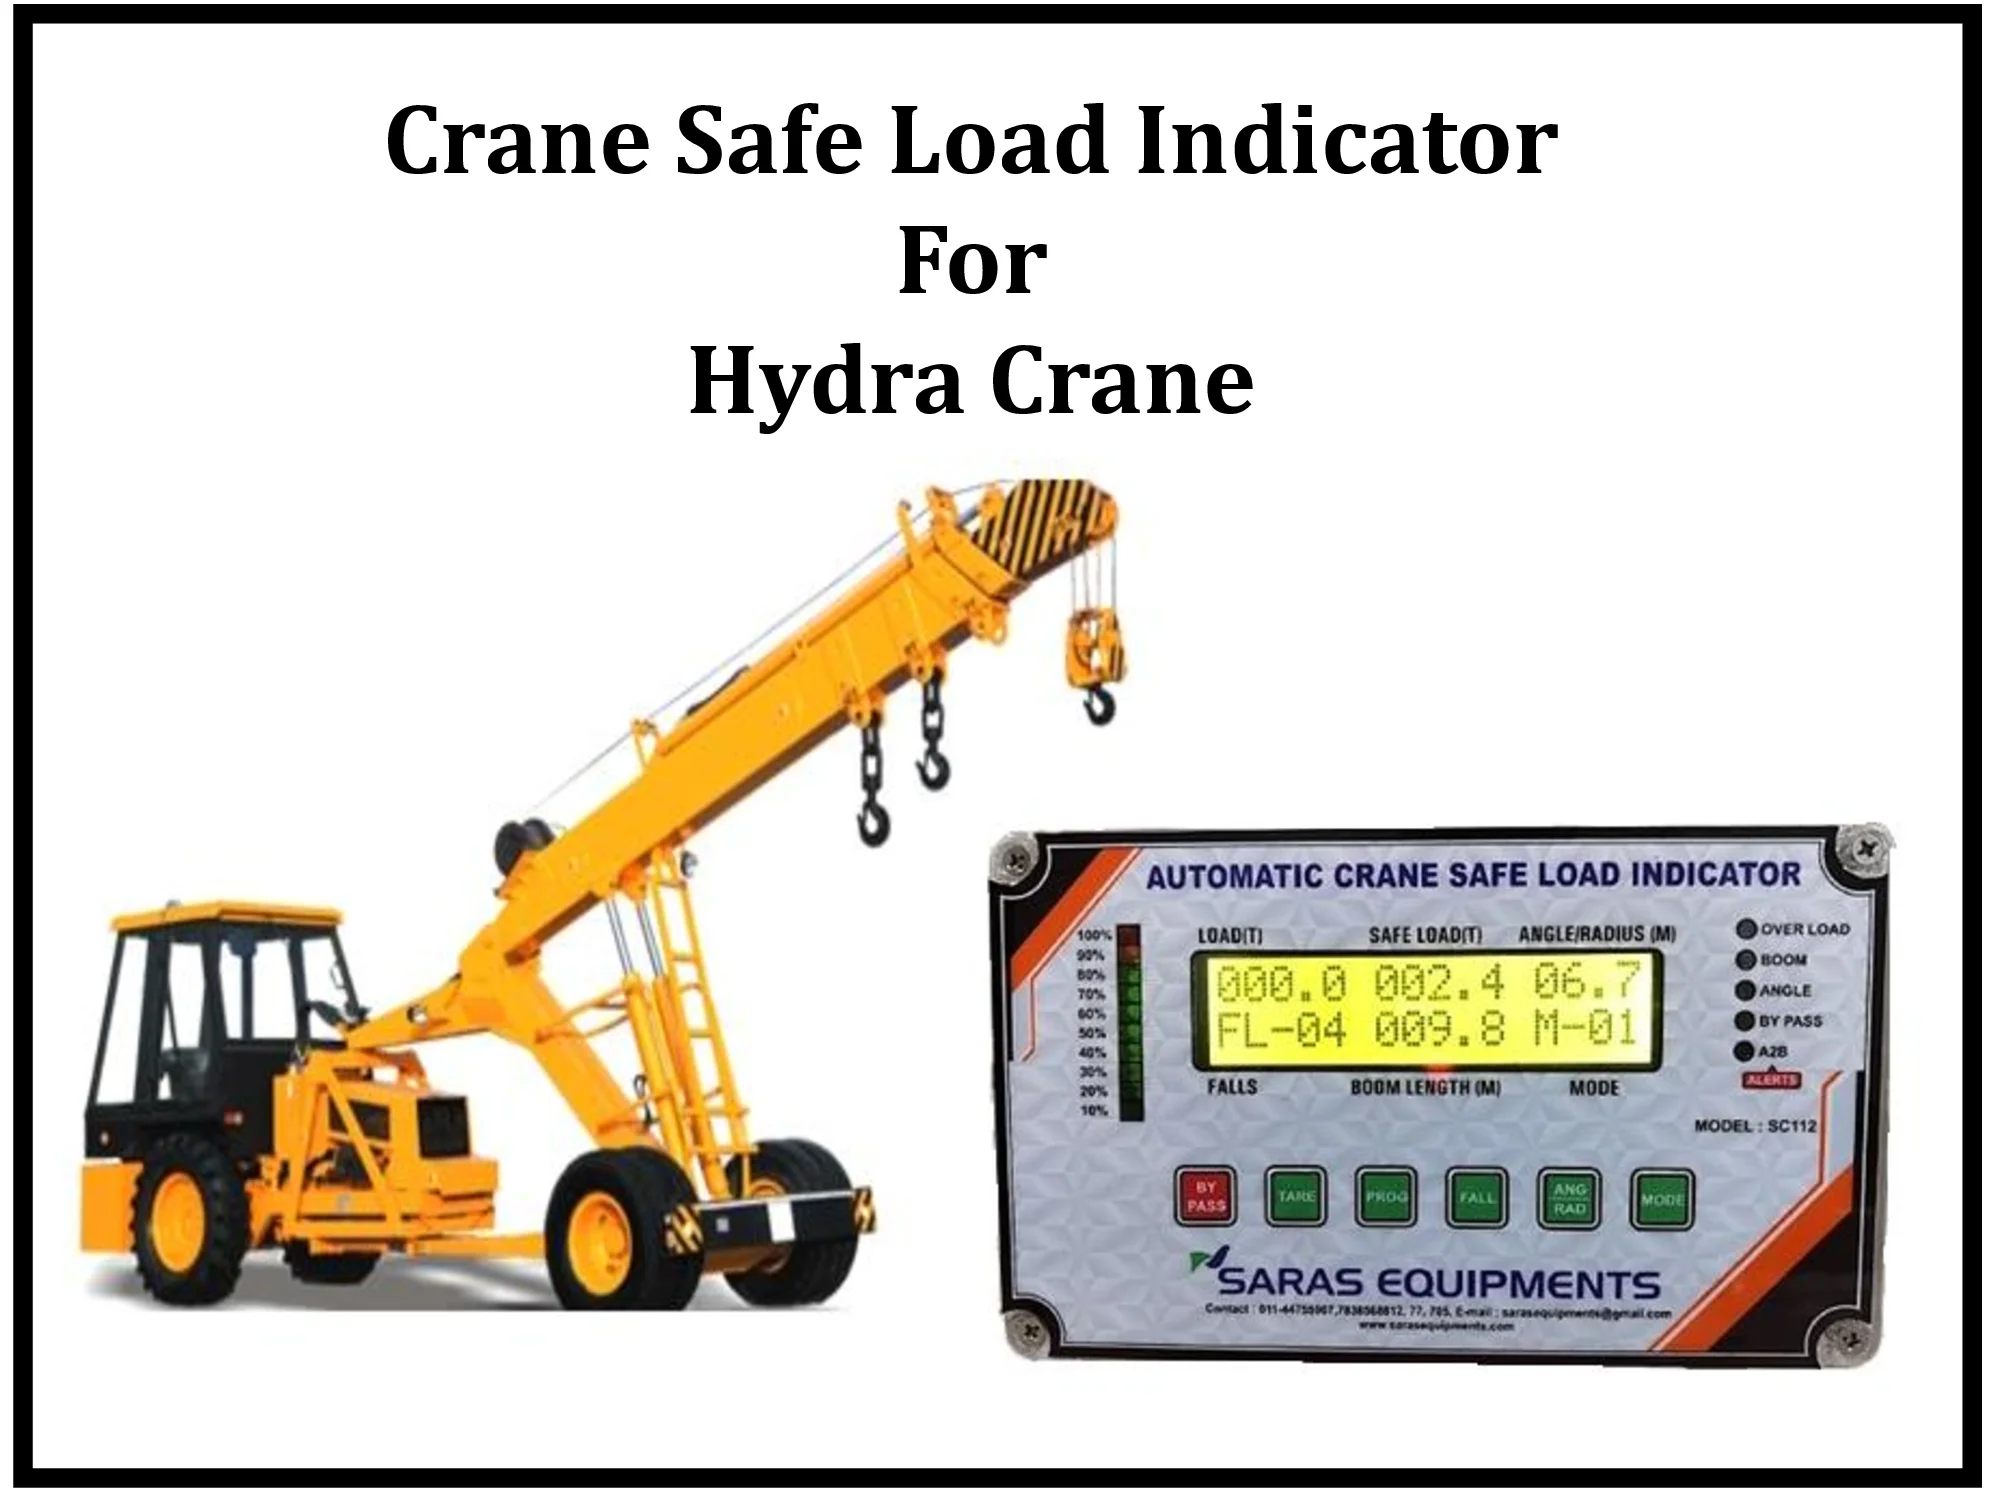 Crane Safe Load Indicator for Hydra crane in Bangalore